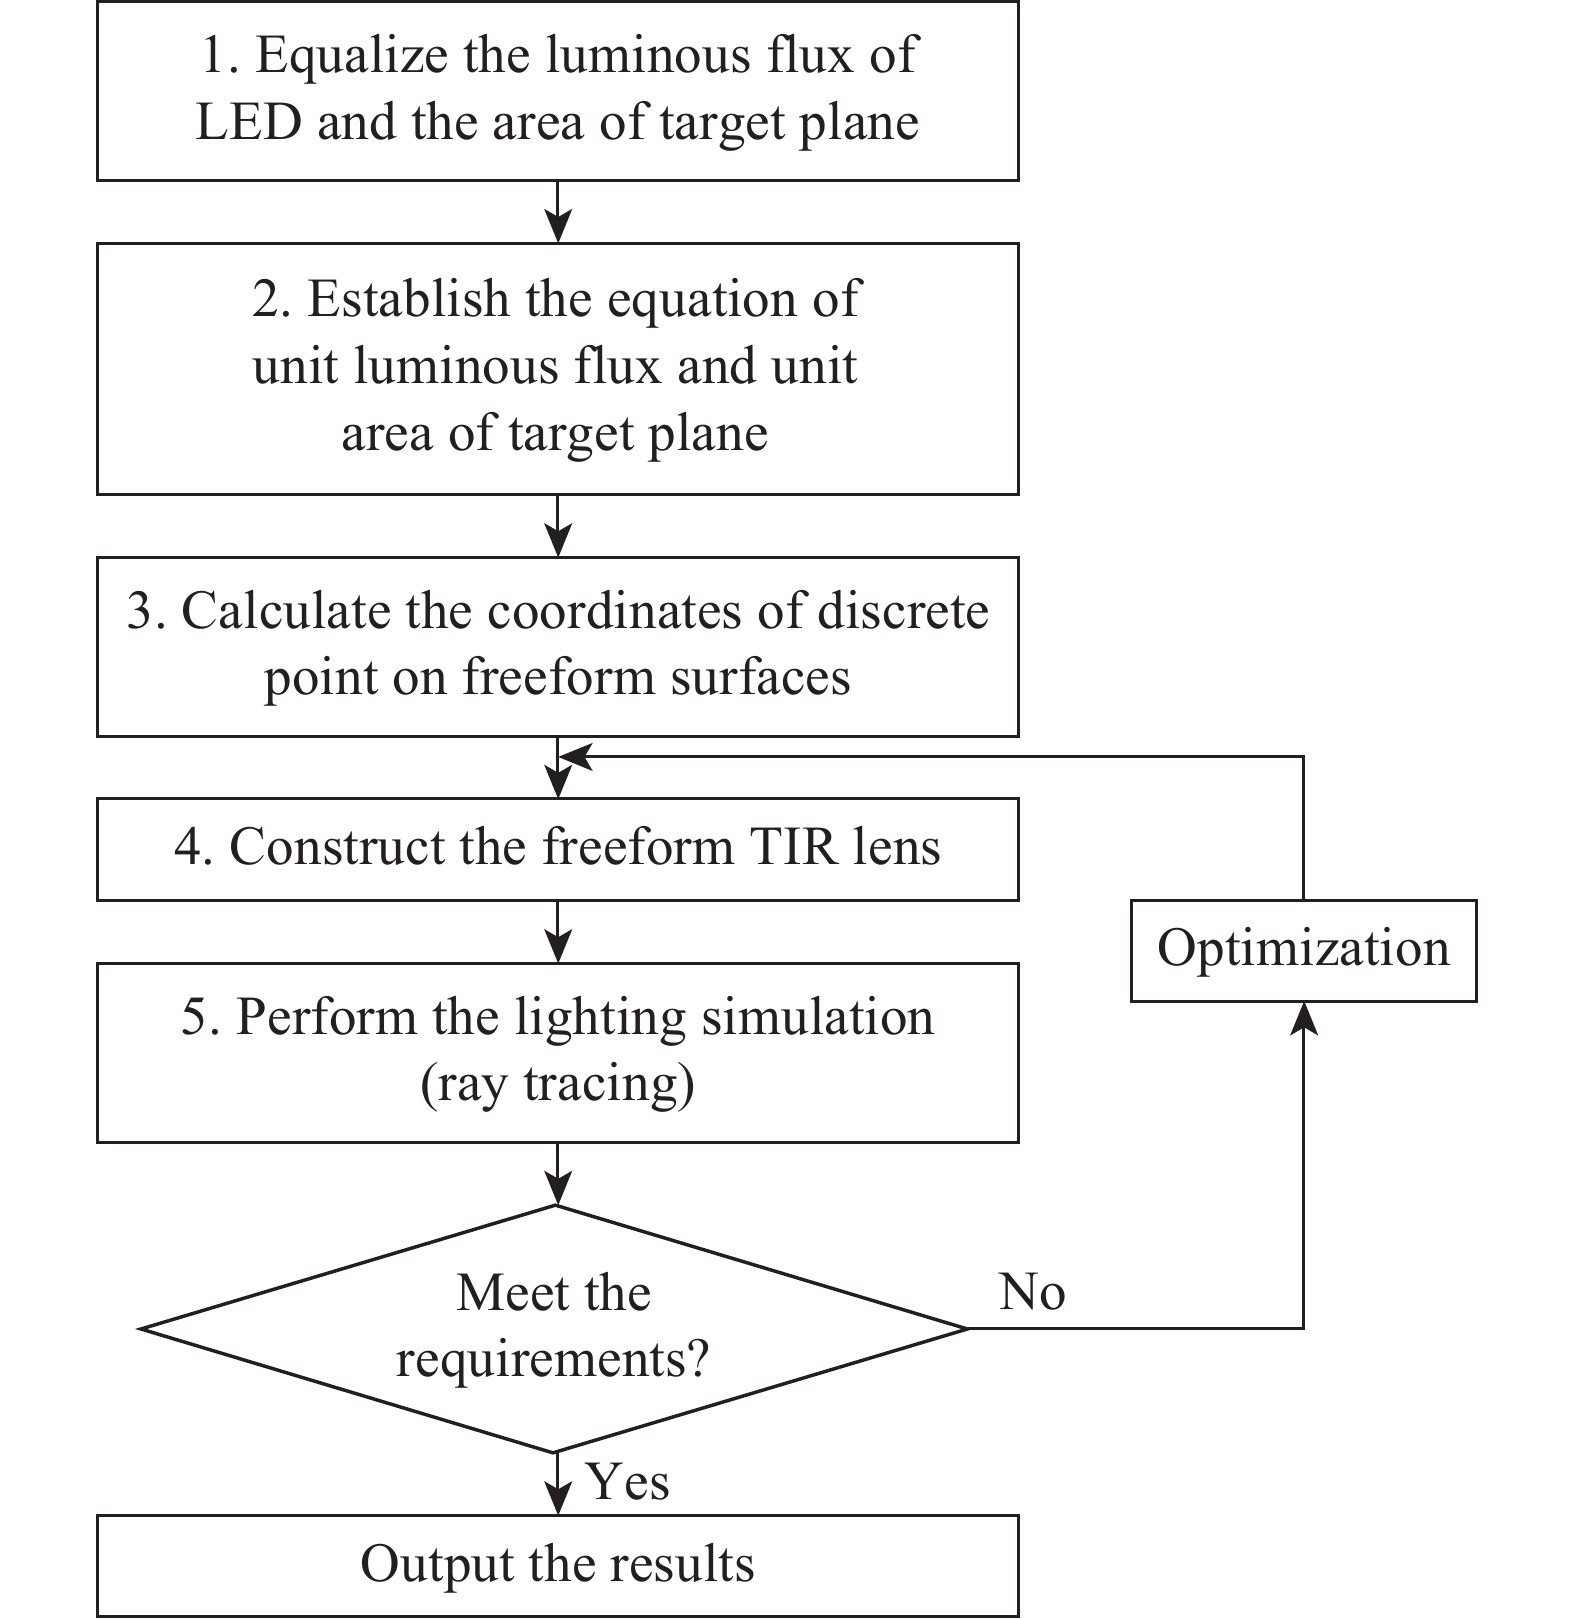 Flow chart for designing the freeform TIR lens